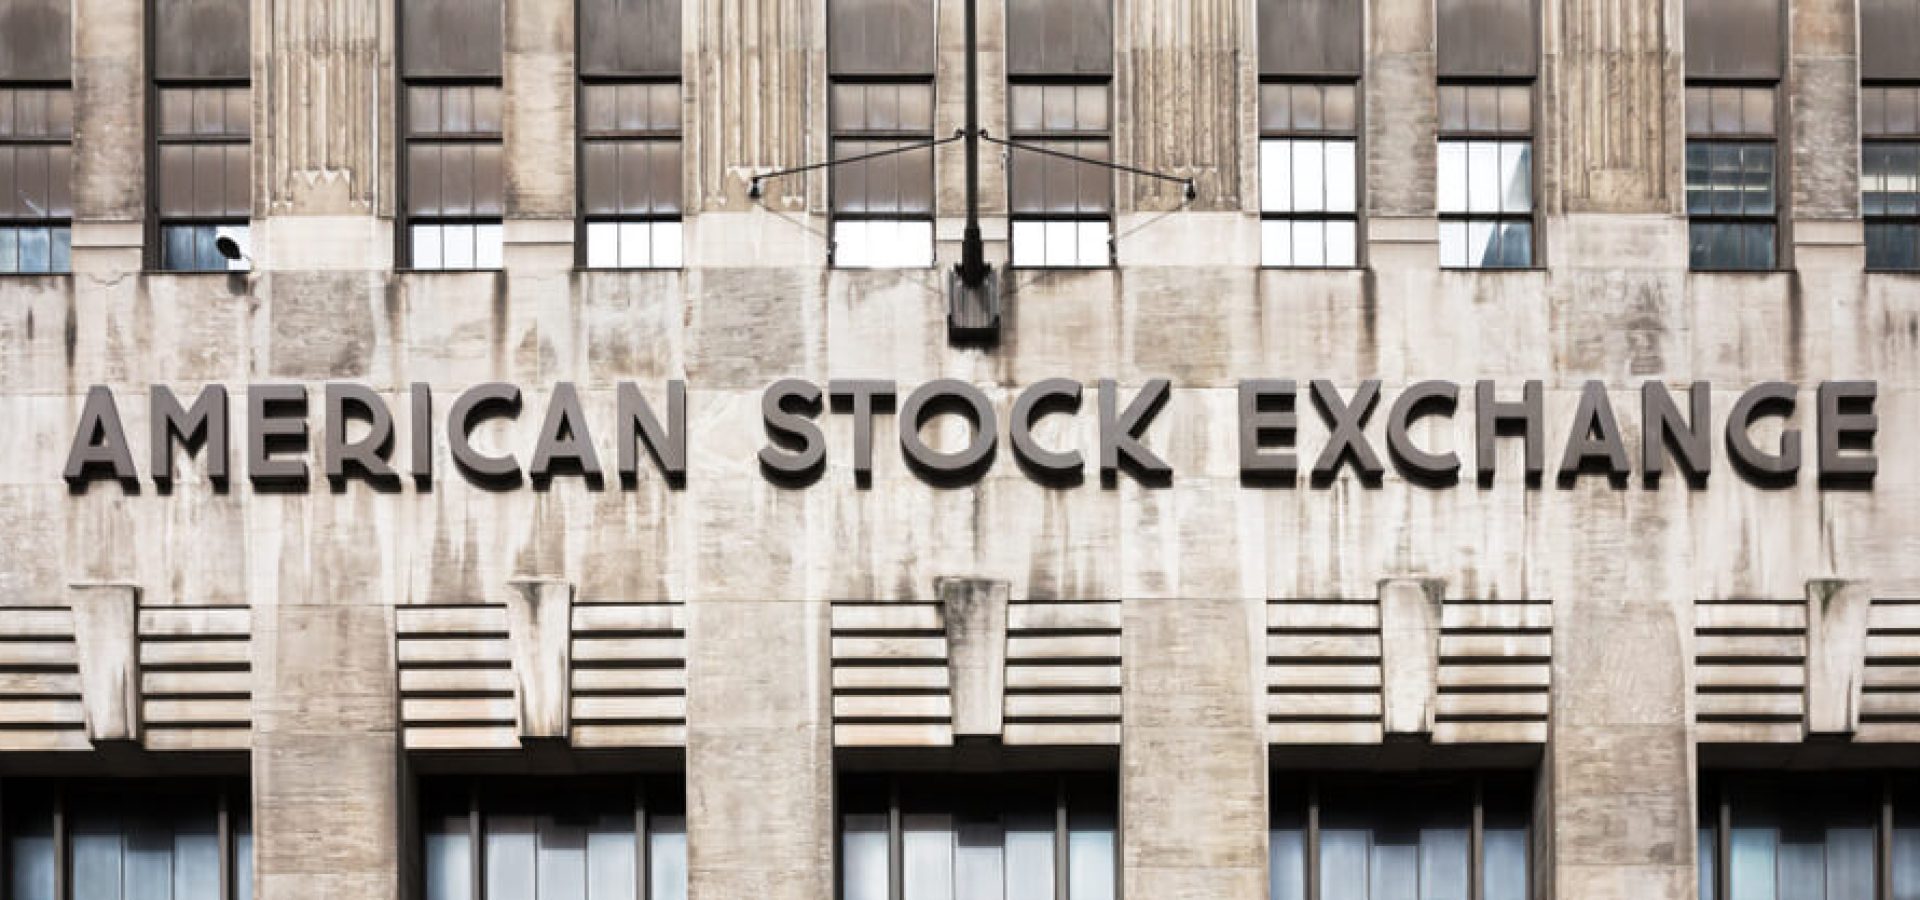 American: American stock exchange sign.